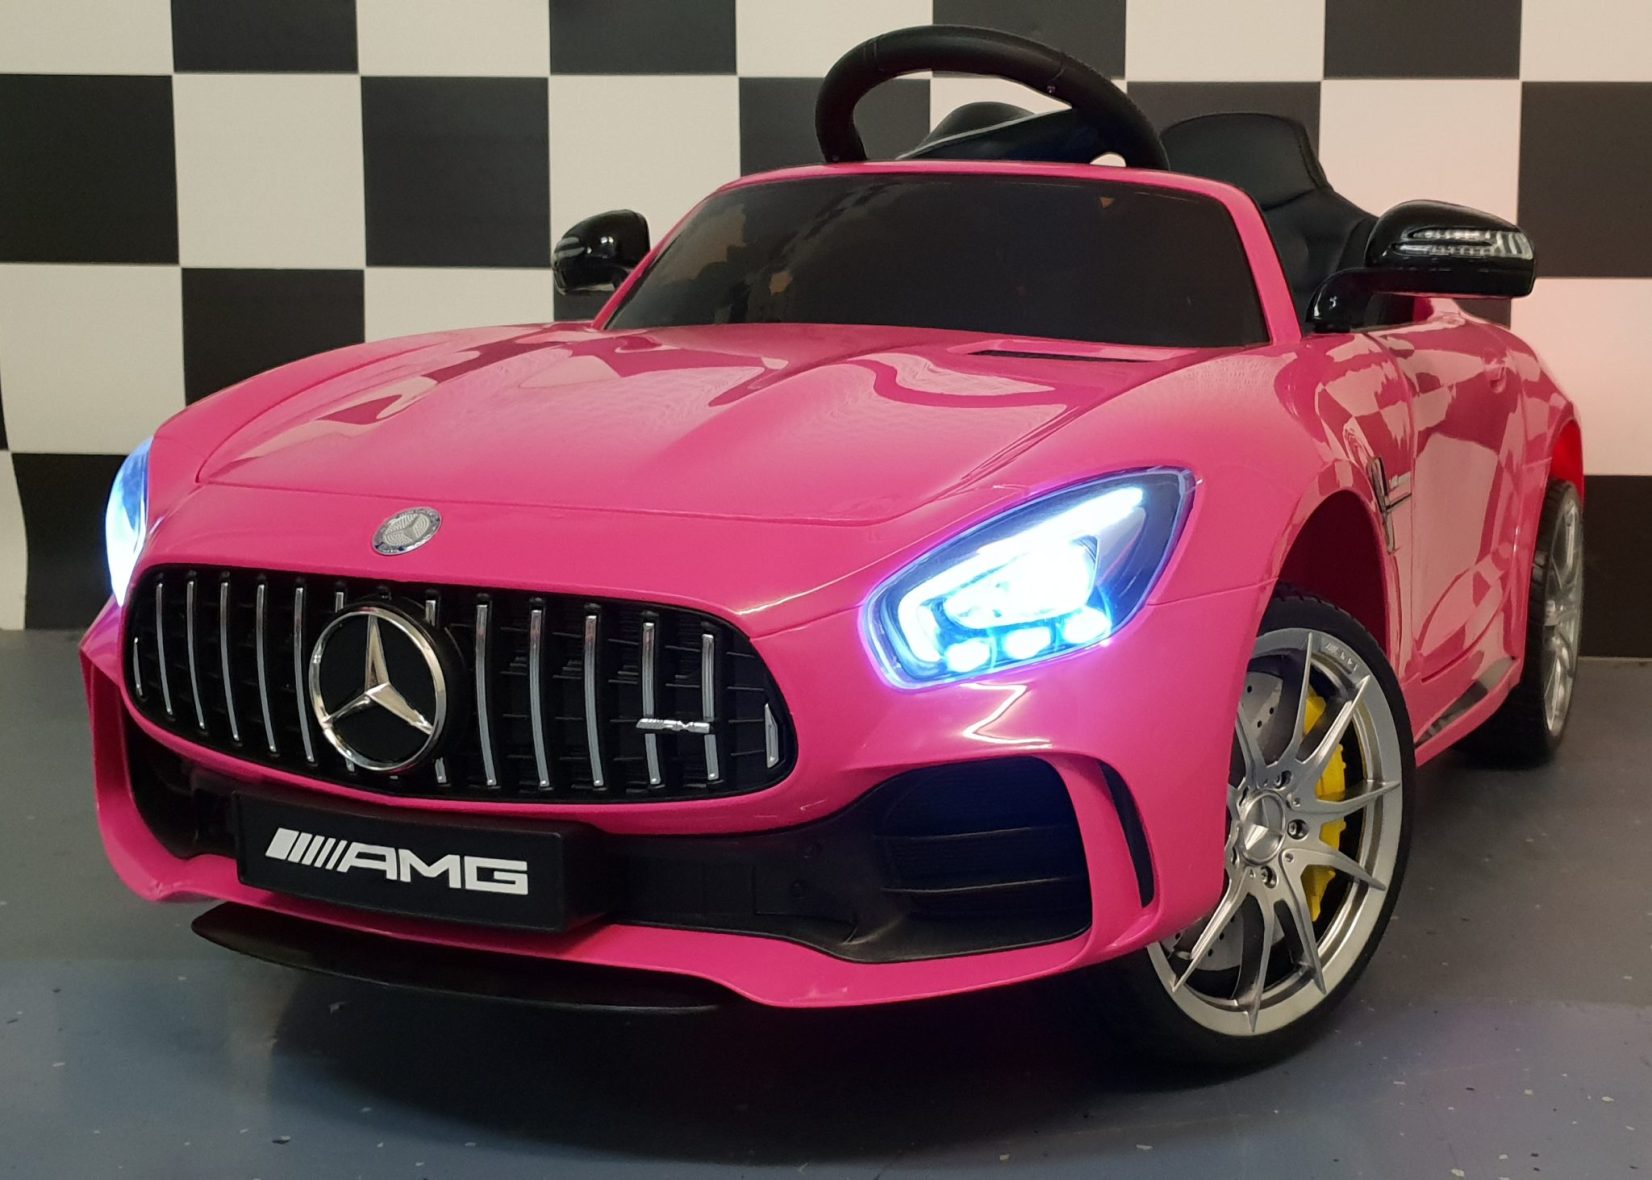 Toy Battery Car Mercedes Gtr Electric Children’s Car Pink